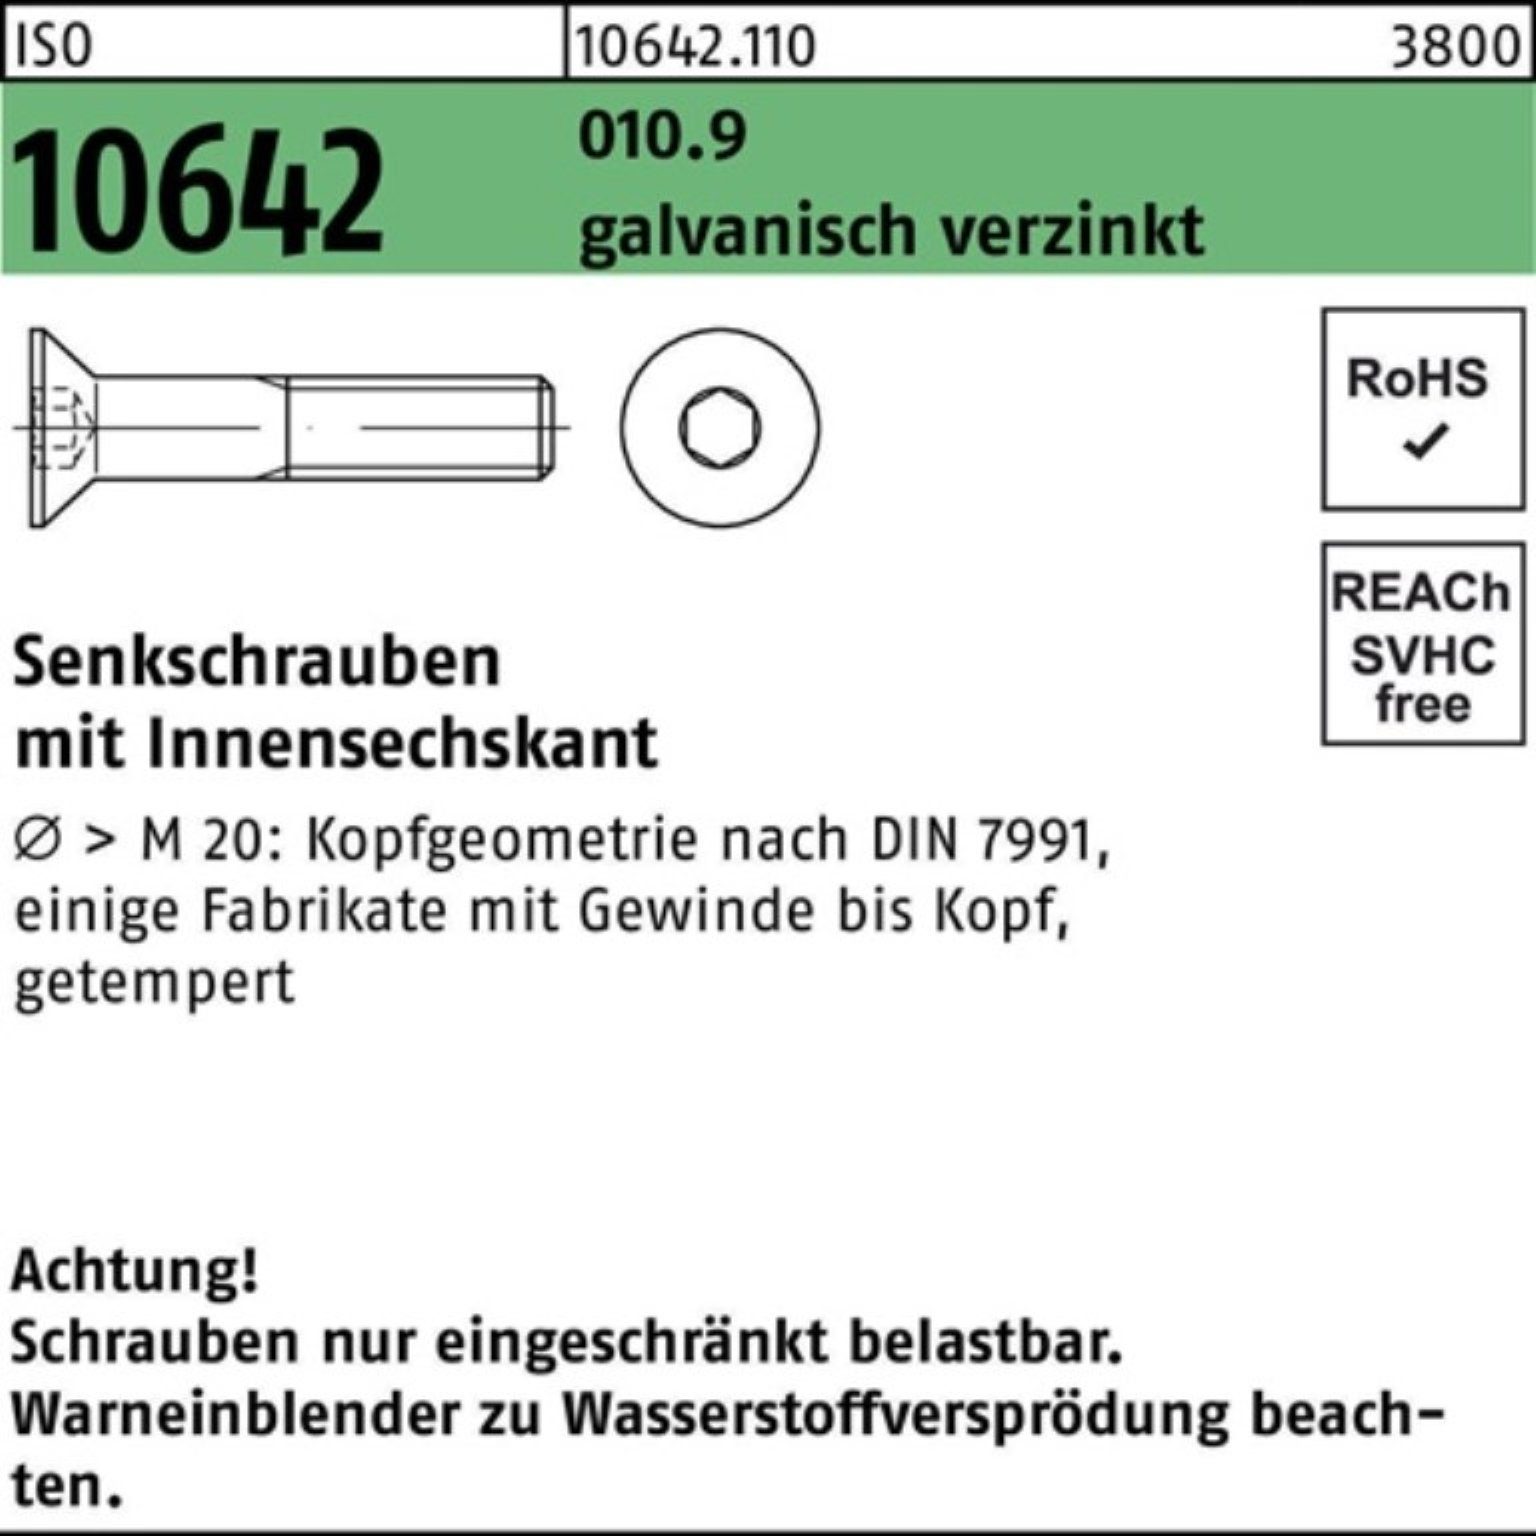 Reyher Senkschraube 500er Pack Senkschraube ISO 10642 Innen-6kt M3x 10 010.9 galv.verz. 50